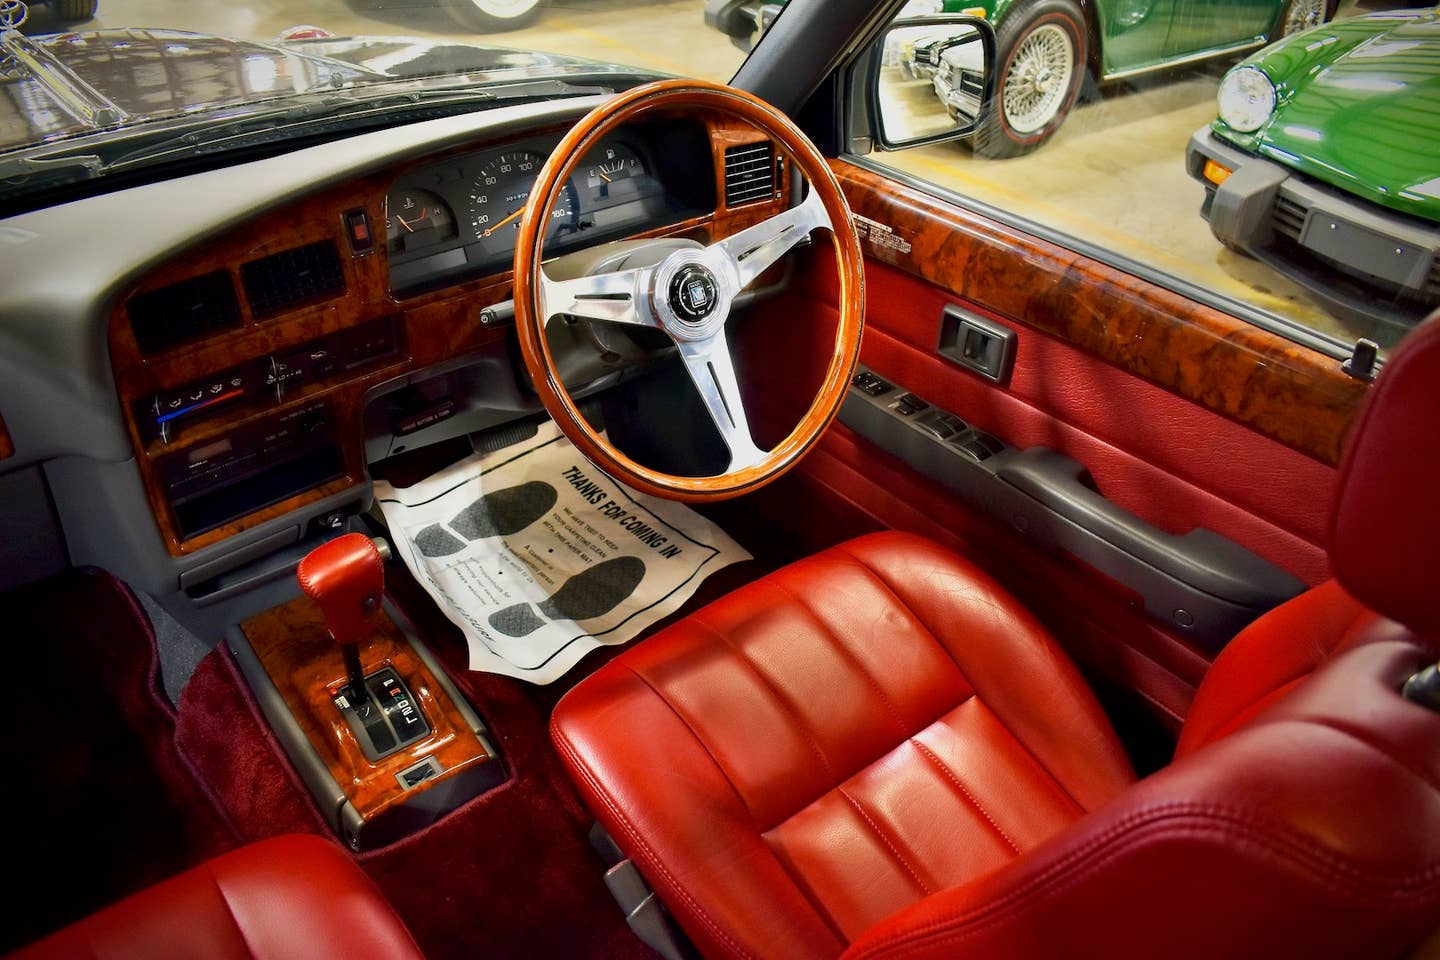 1996 Toyota Classic cockpit